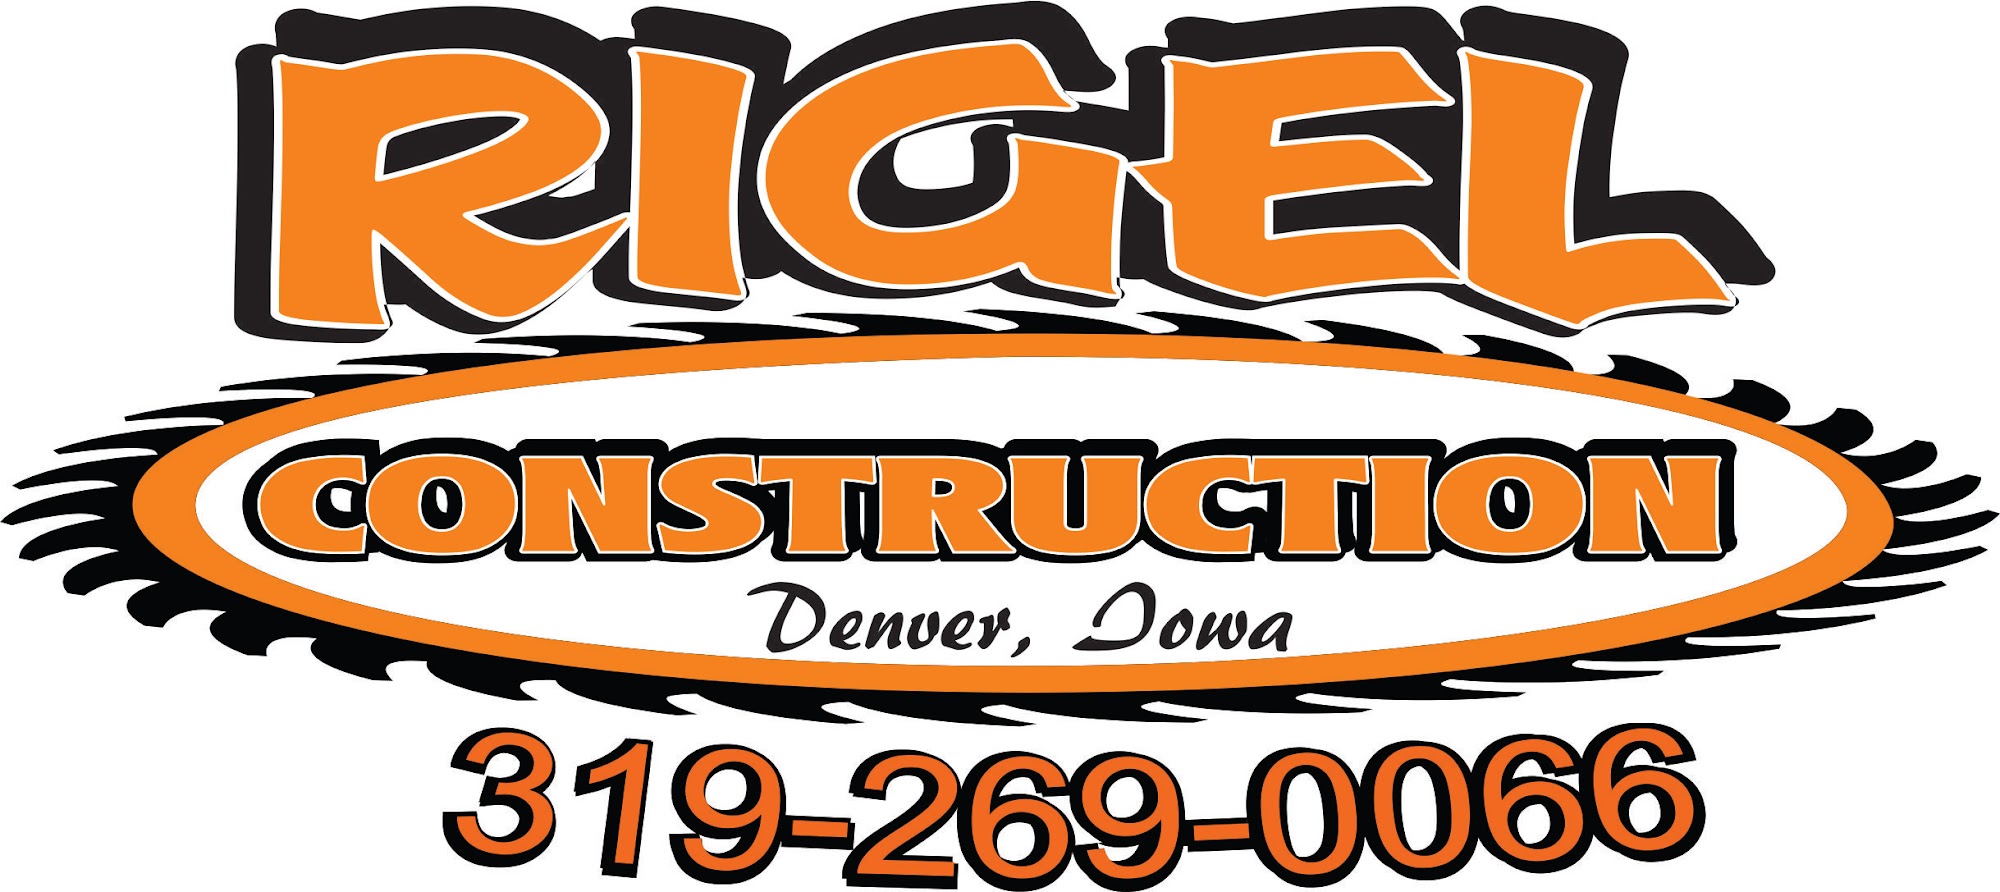 Rigel Construction, LLC 2534 Killdeer Ave, Denver Iowa 50622